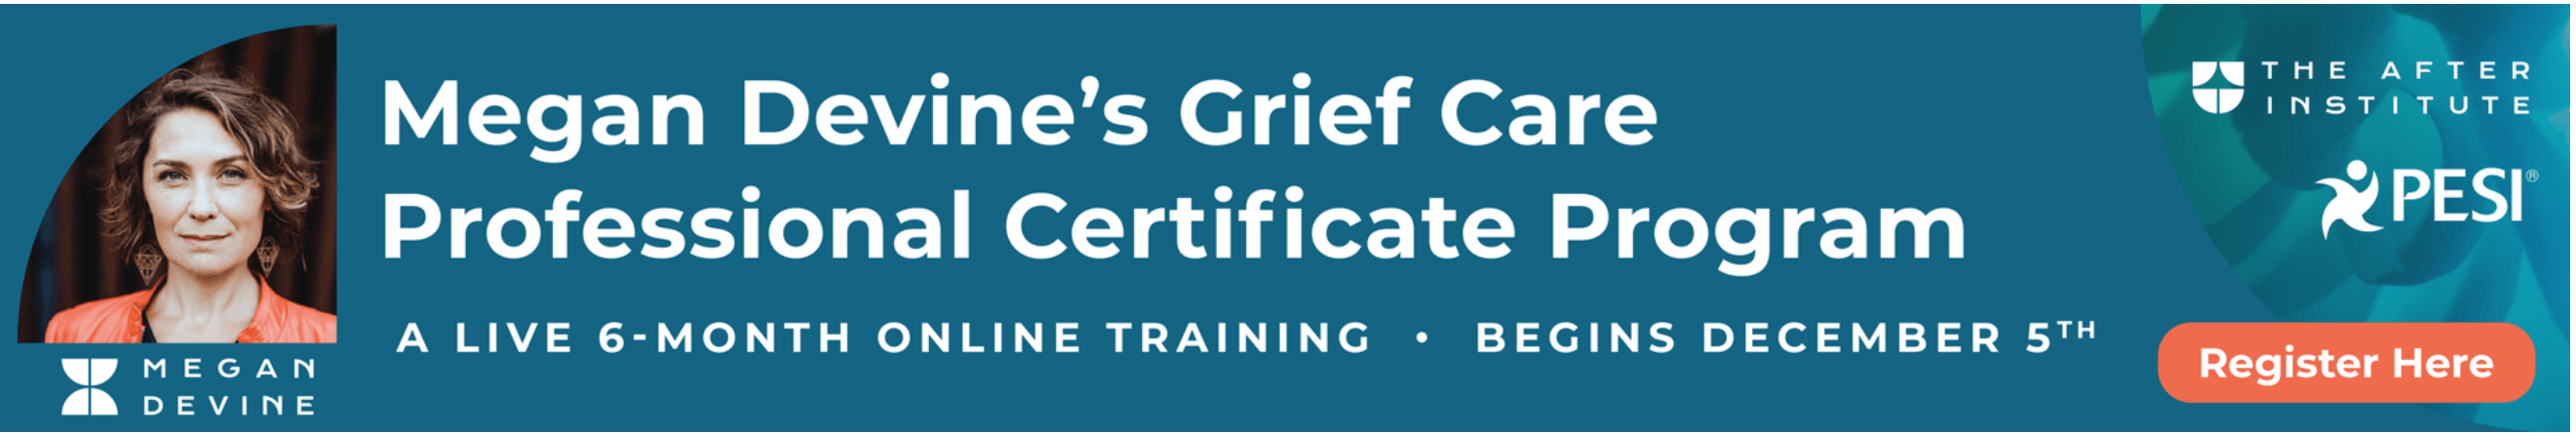 banner showing Megan Devine's grief care program and the registration button